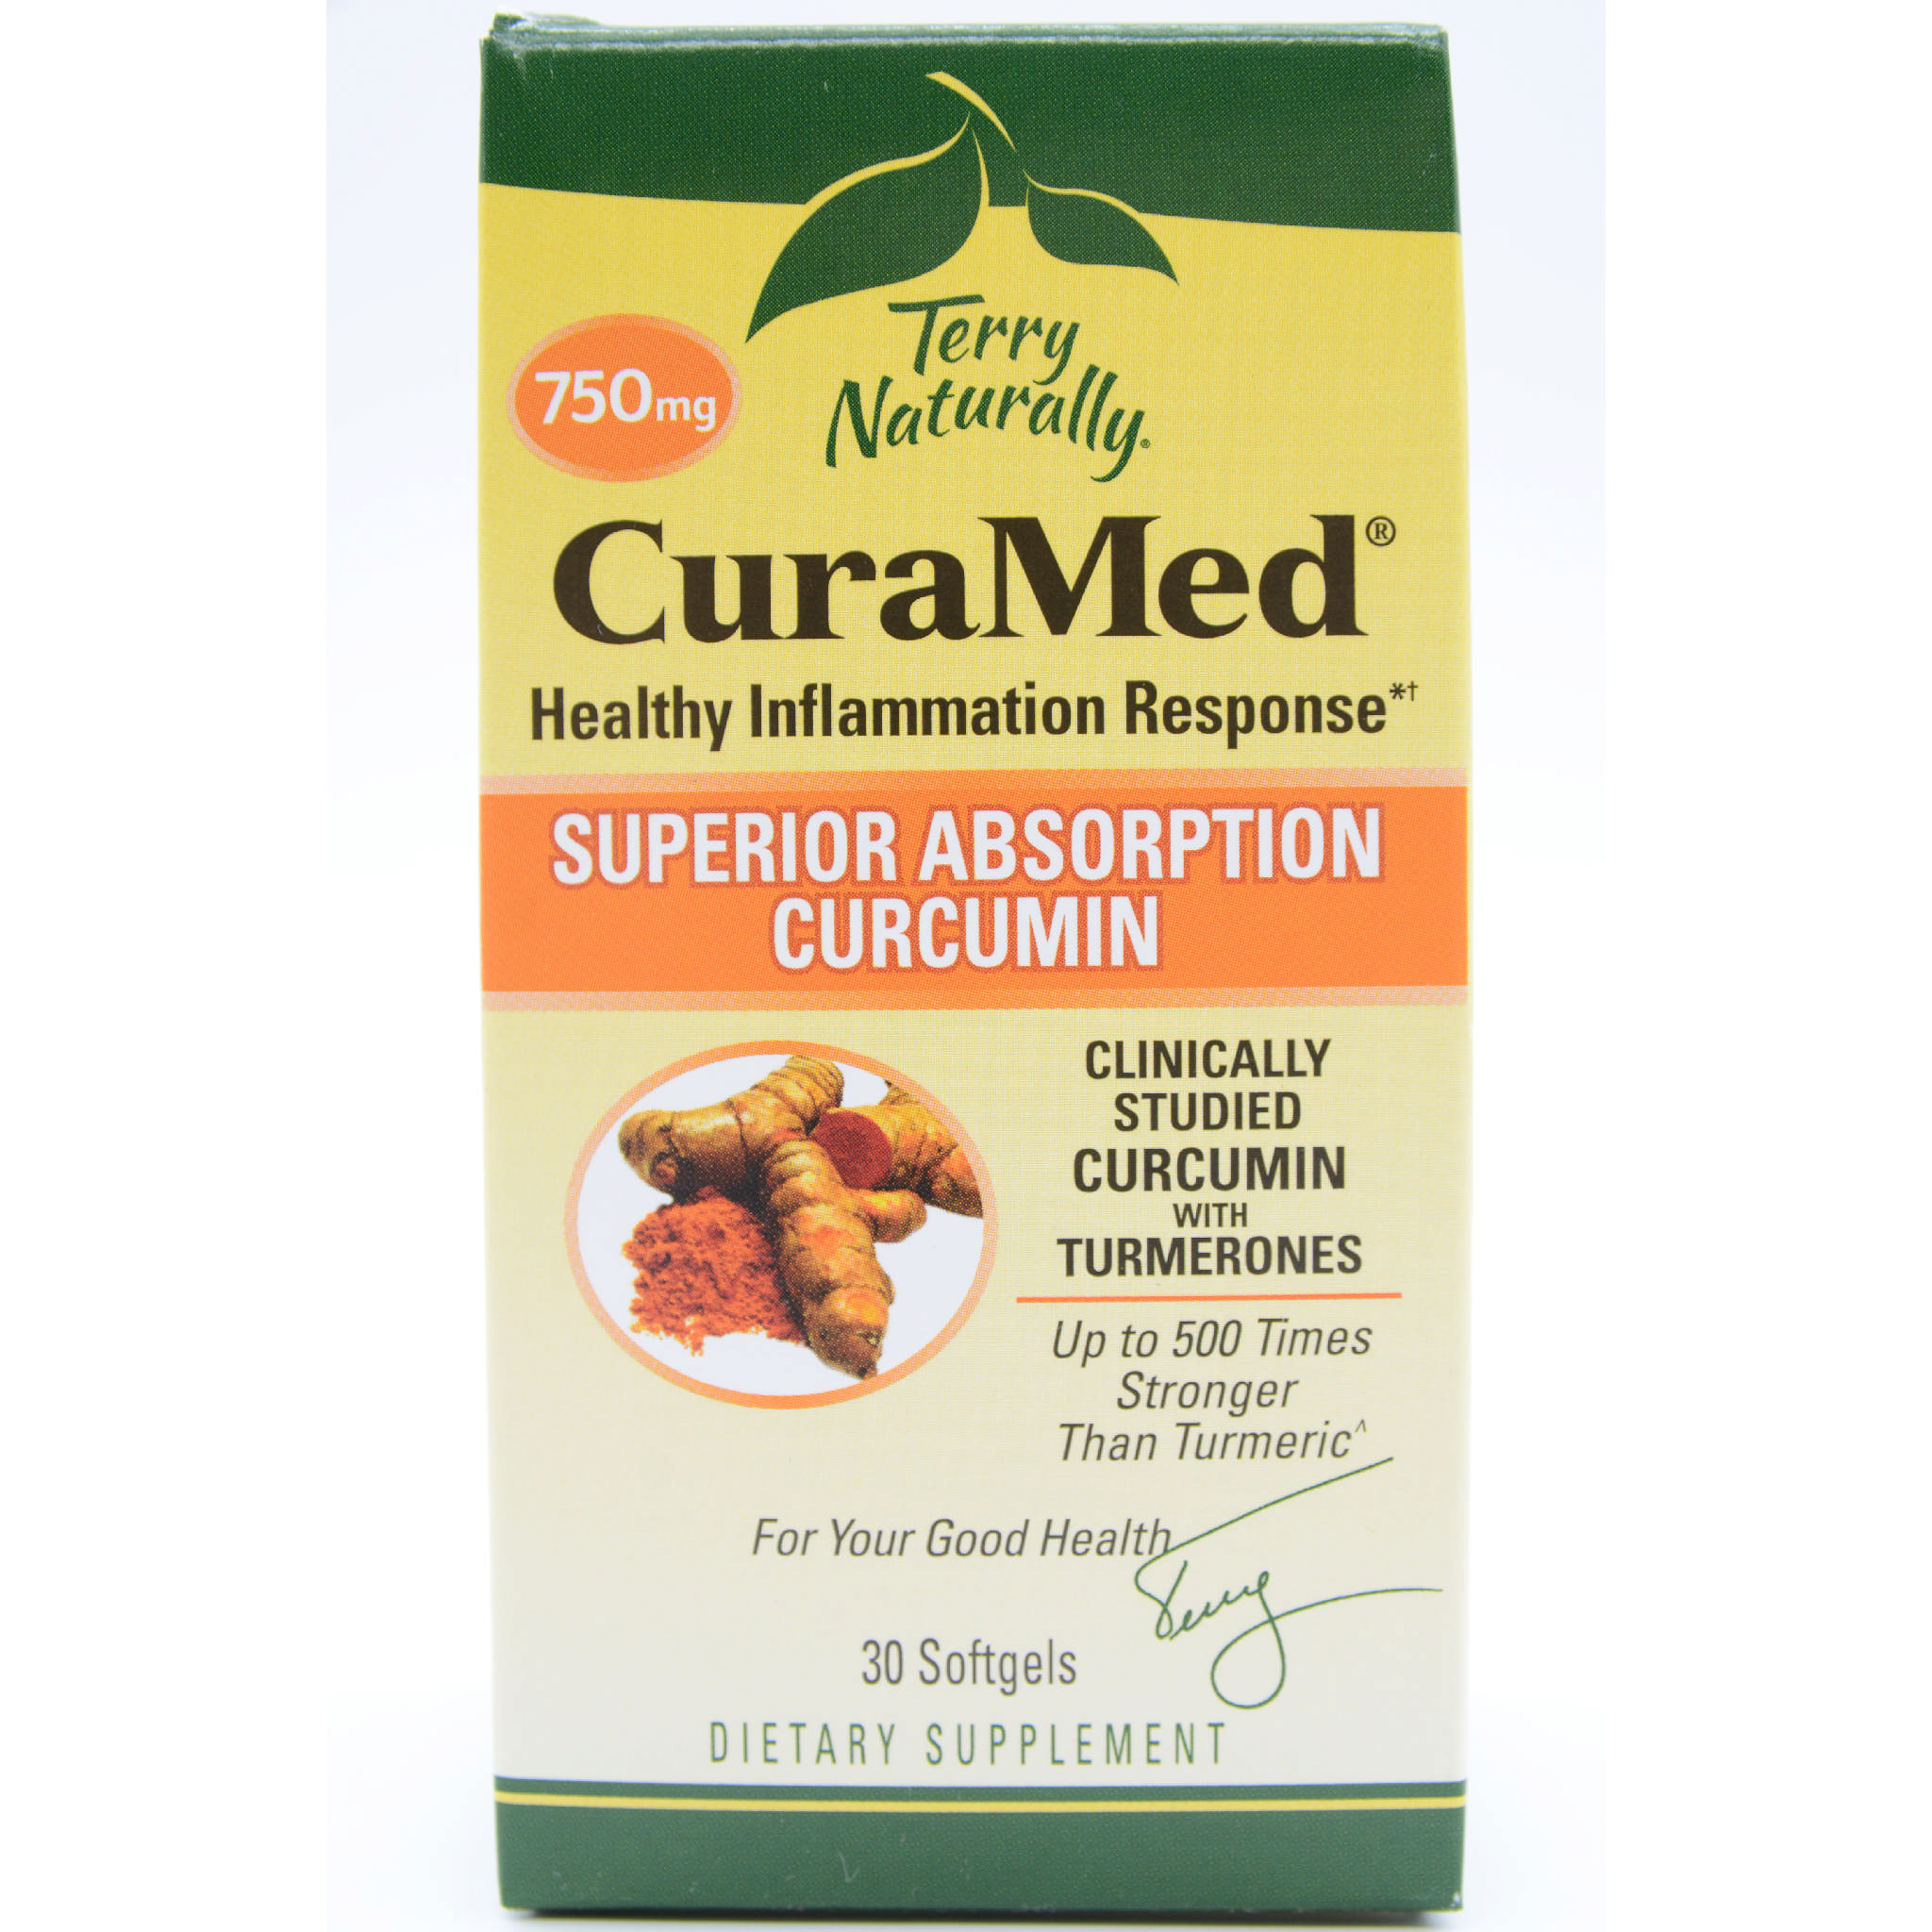 Terry Naturally - Curamed 750 mg Curcumin